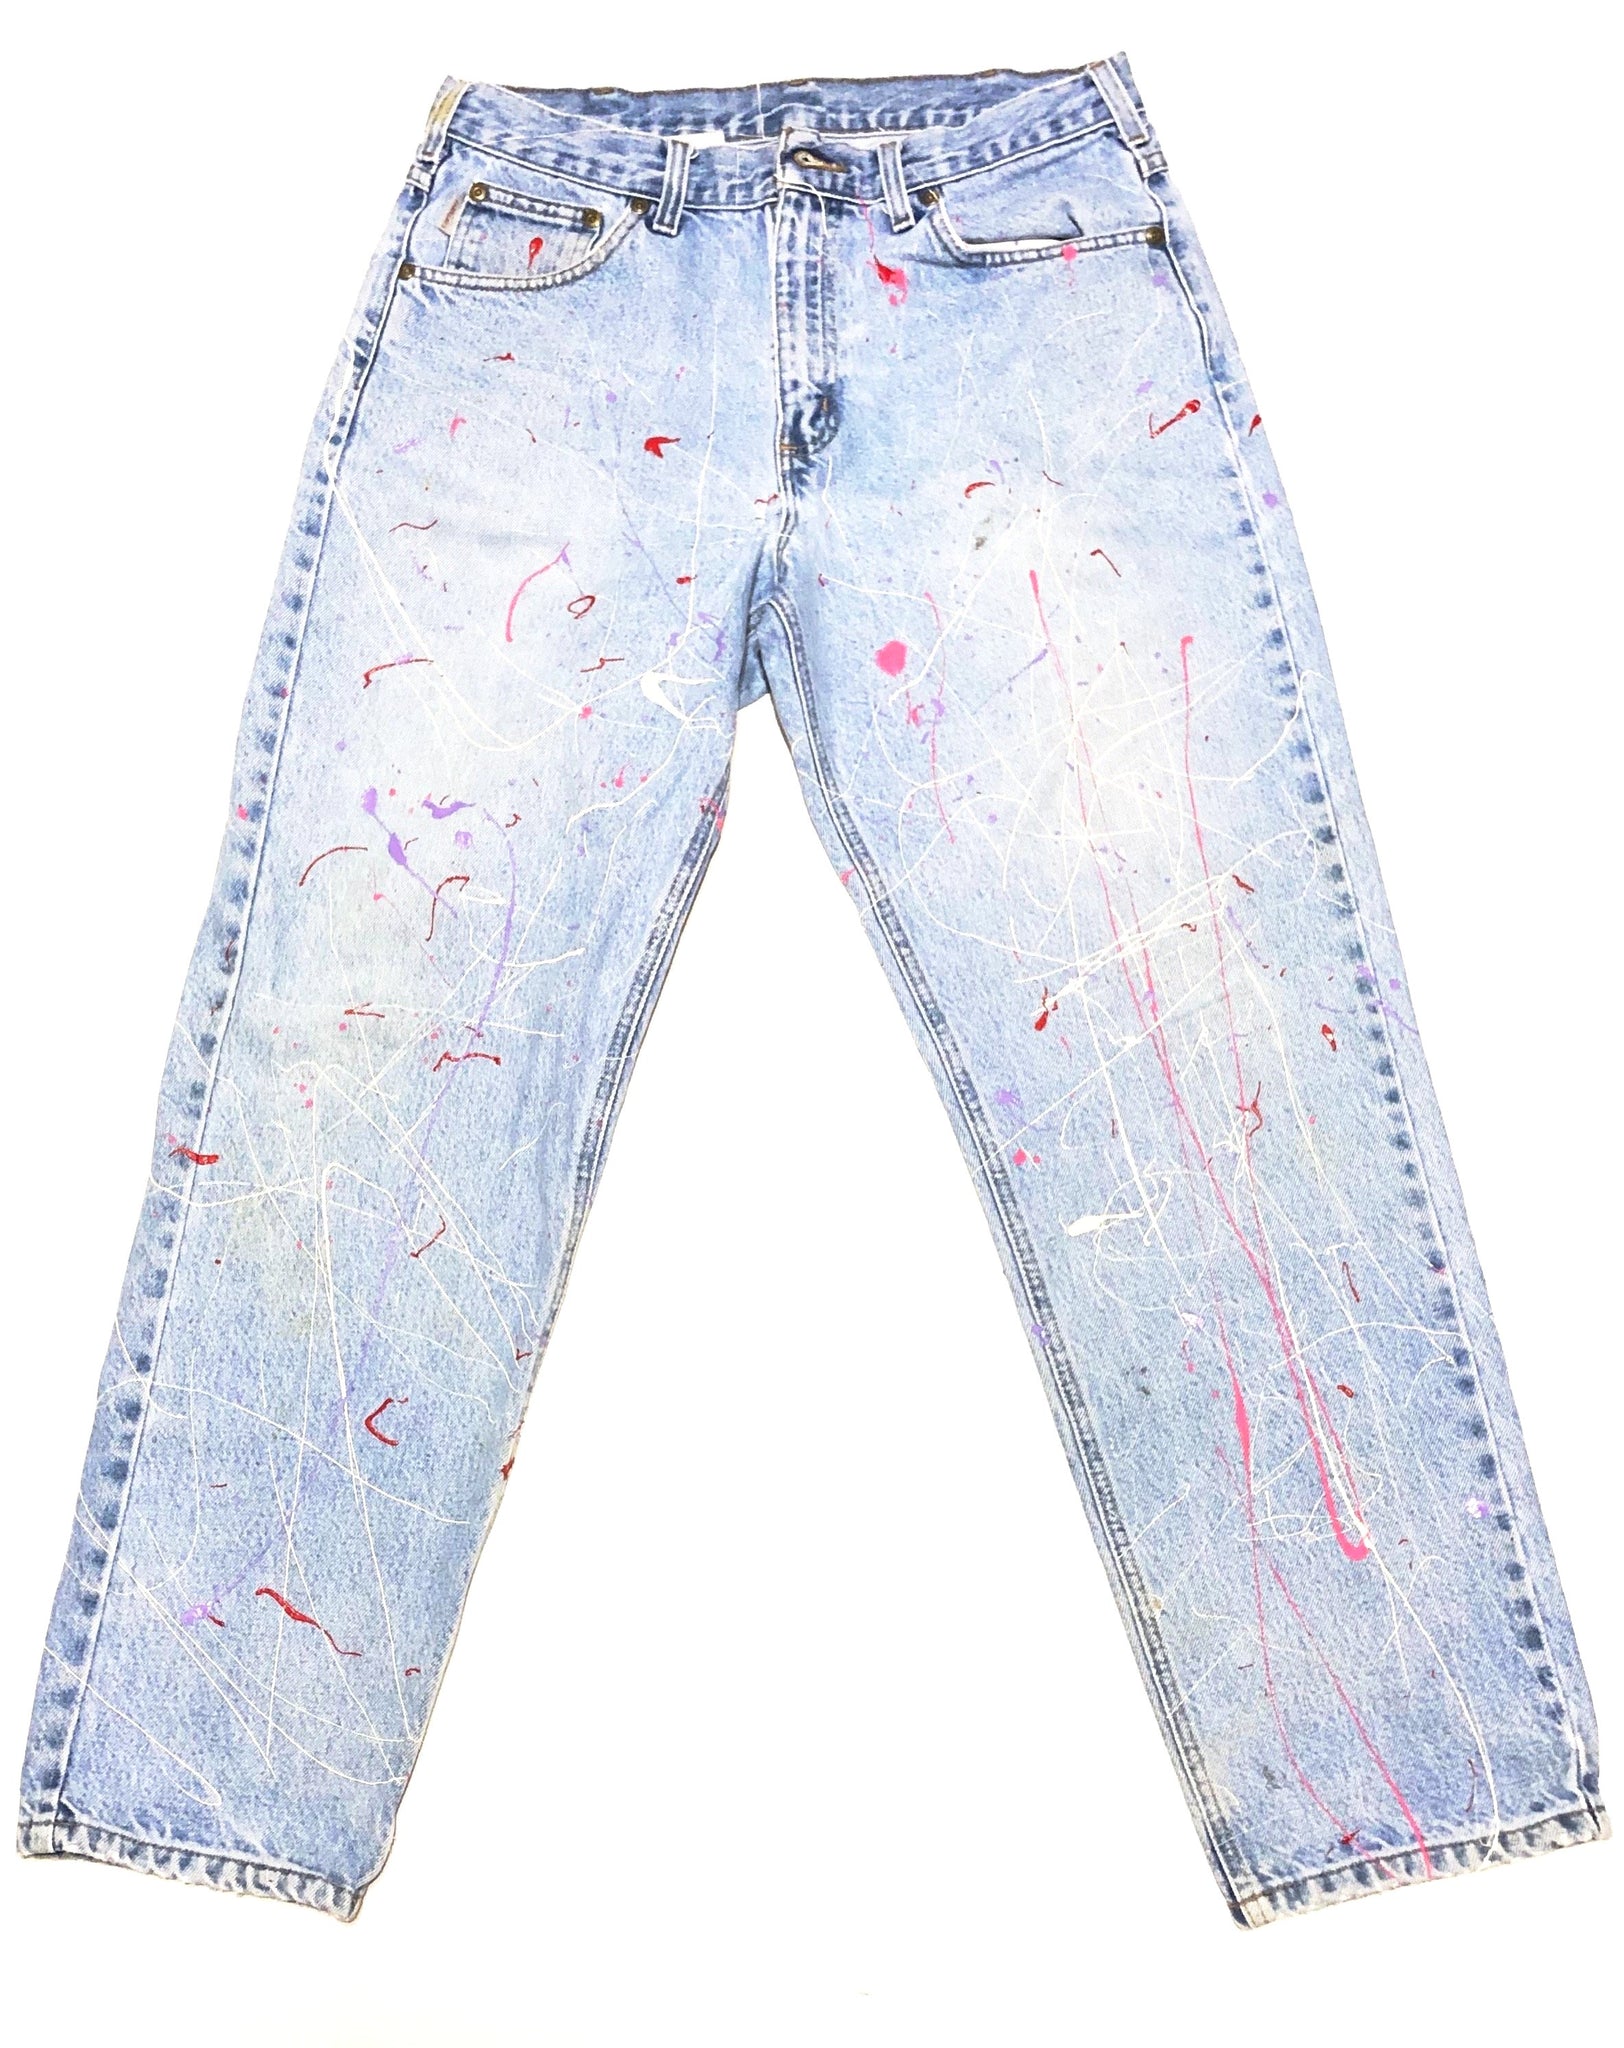 Custom 1/1 Paint Splattered Carhartt Jeans Light Wash Size 34x30 - Beyond 94